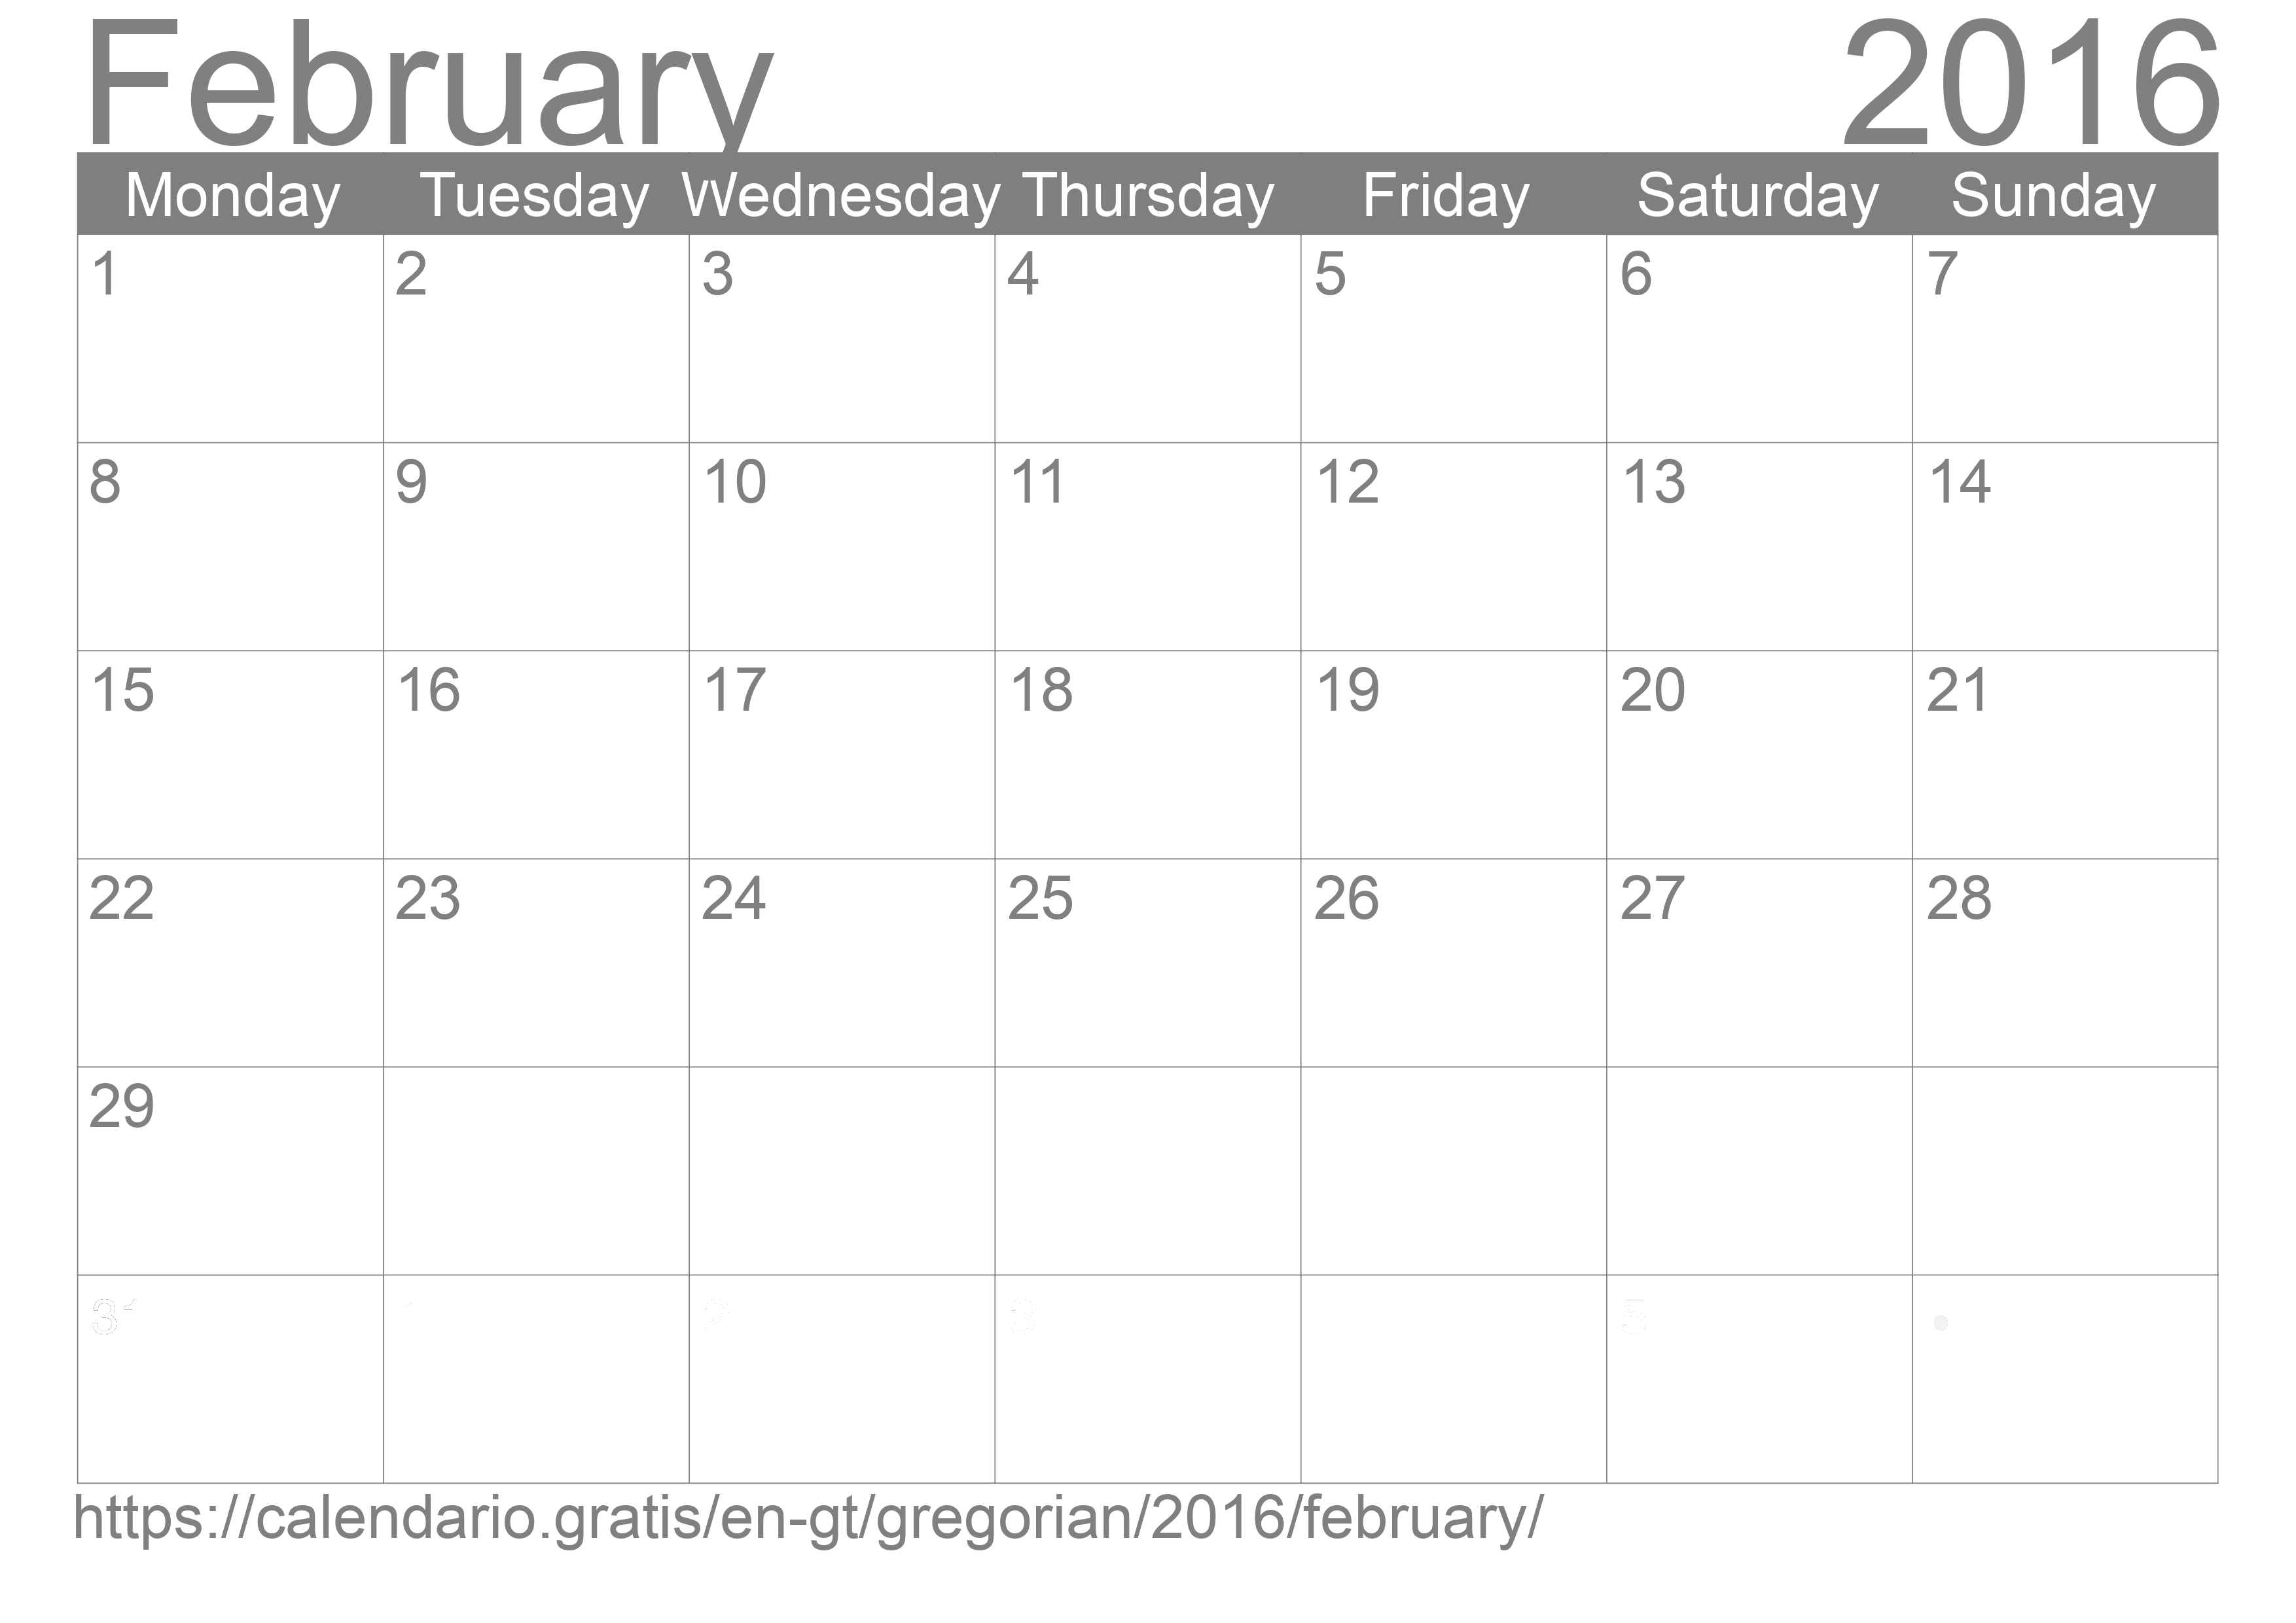 Calendar February 2016 to print